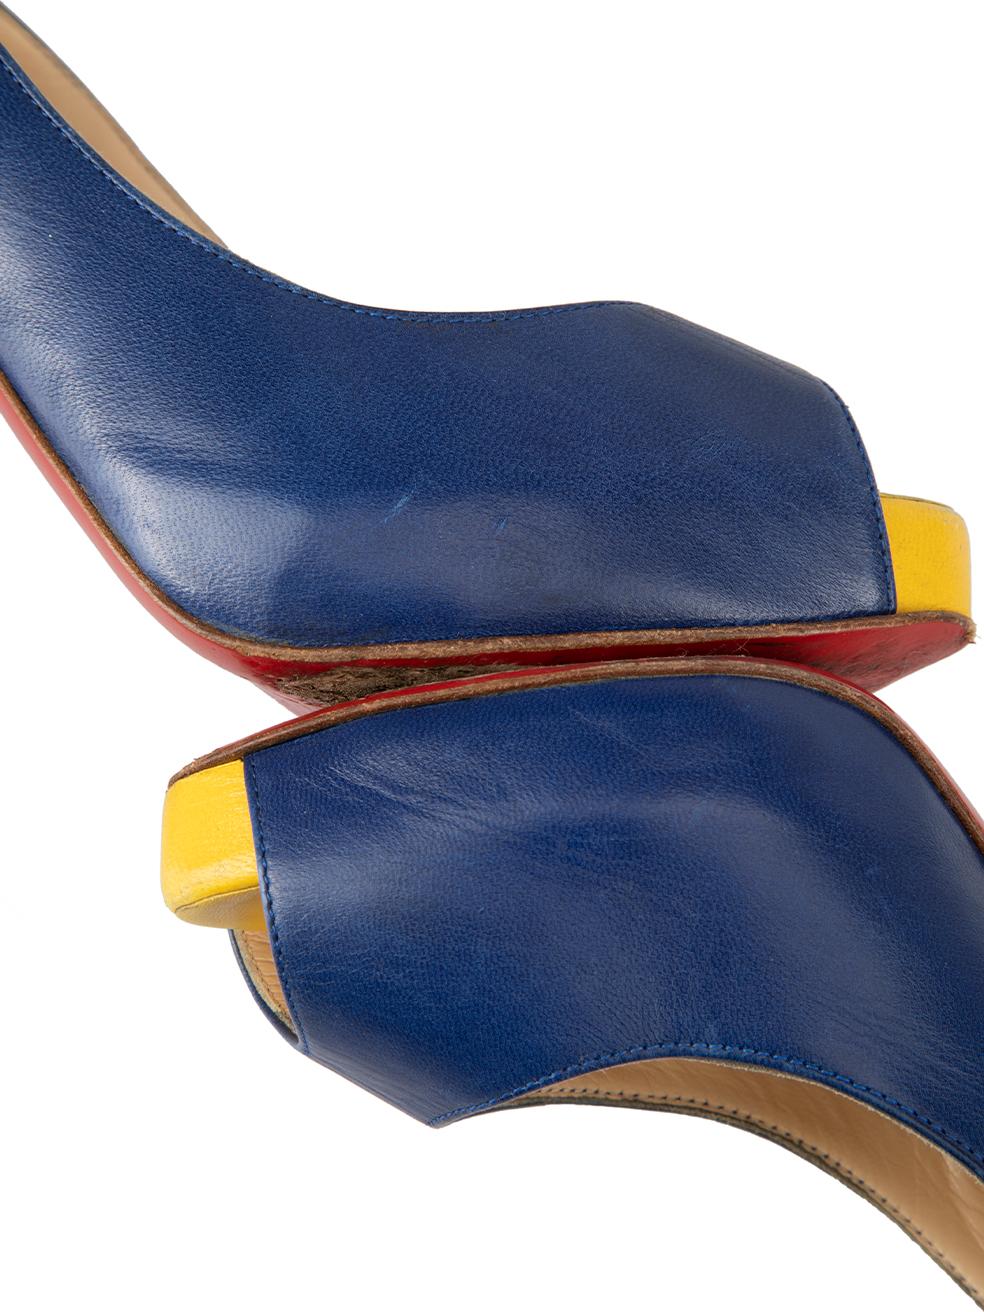 Christian Louboutin Women's Blue Leather Colour Block Slingback Heels For Sale 1